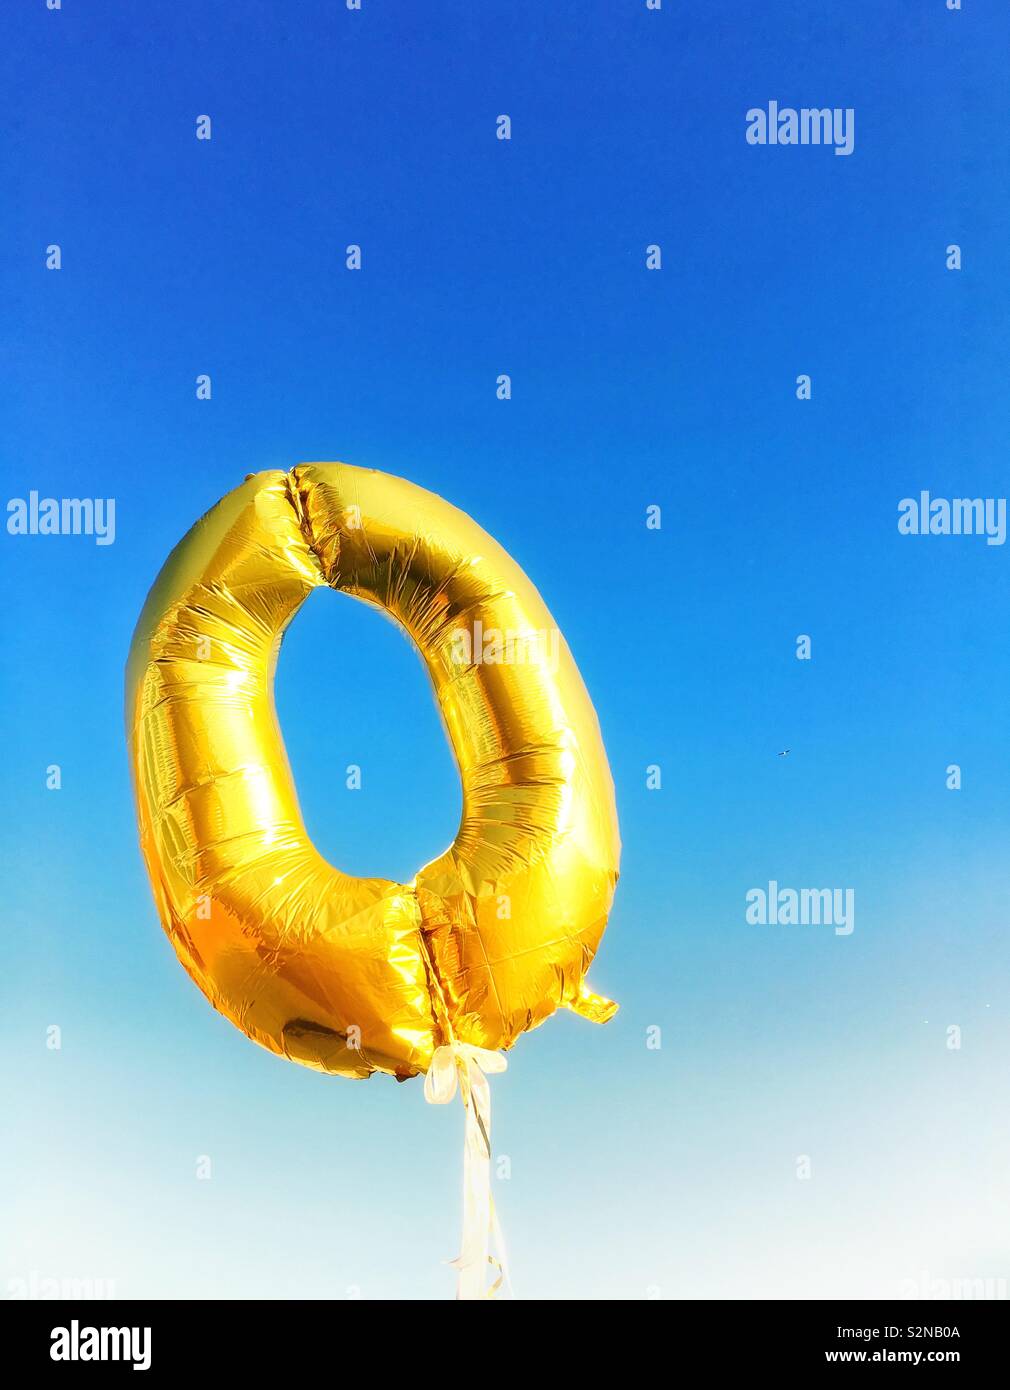 Ballon d'or (0) circulaire flottant contre un ciel bleu vif Banque D'Images